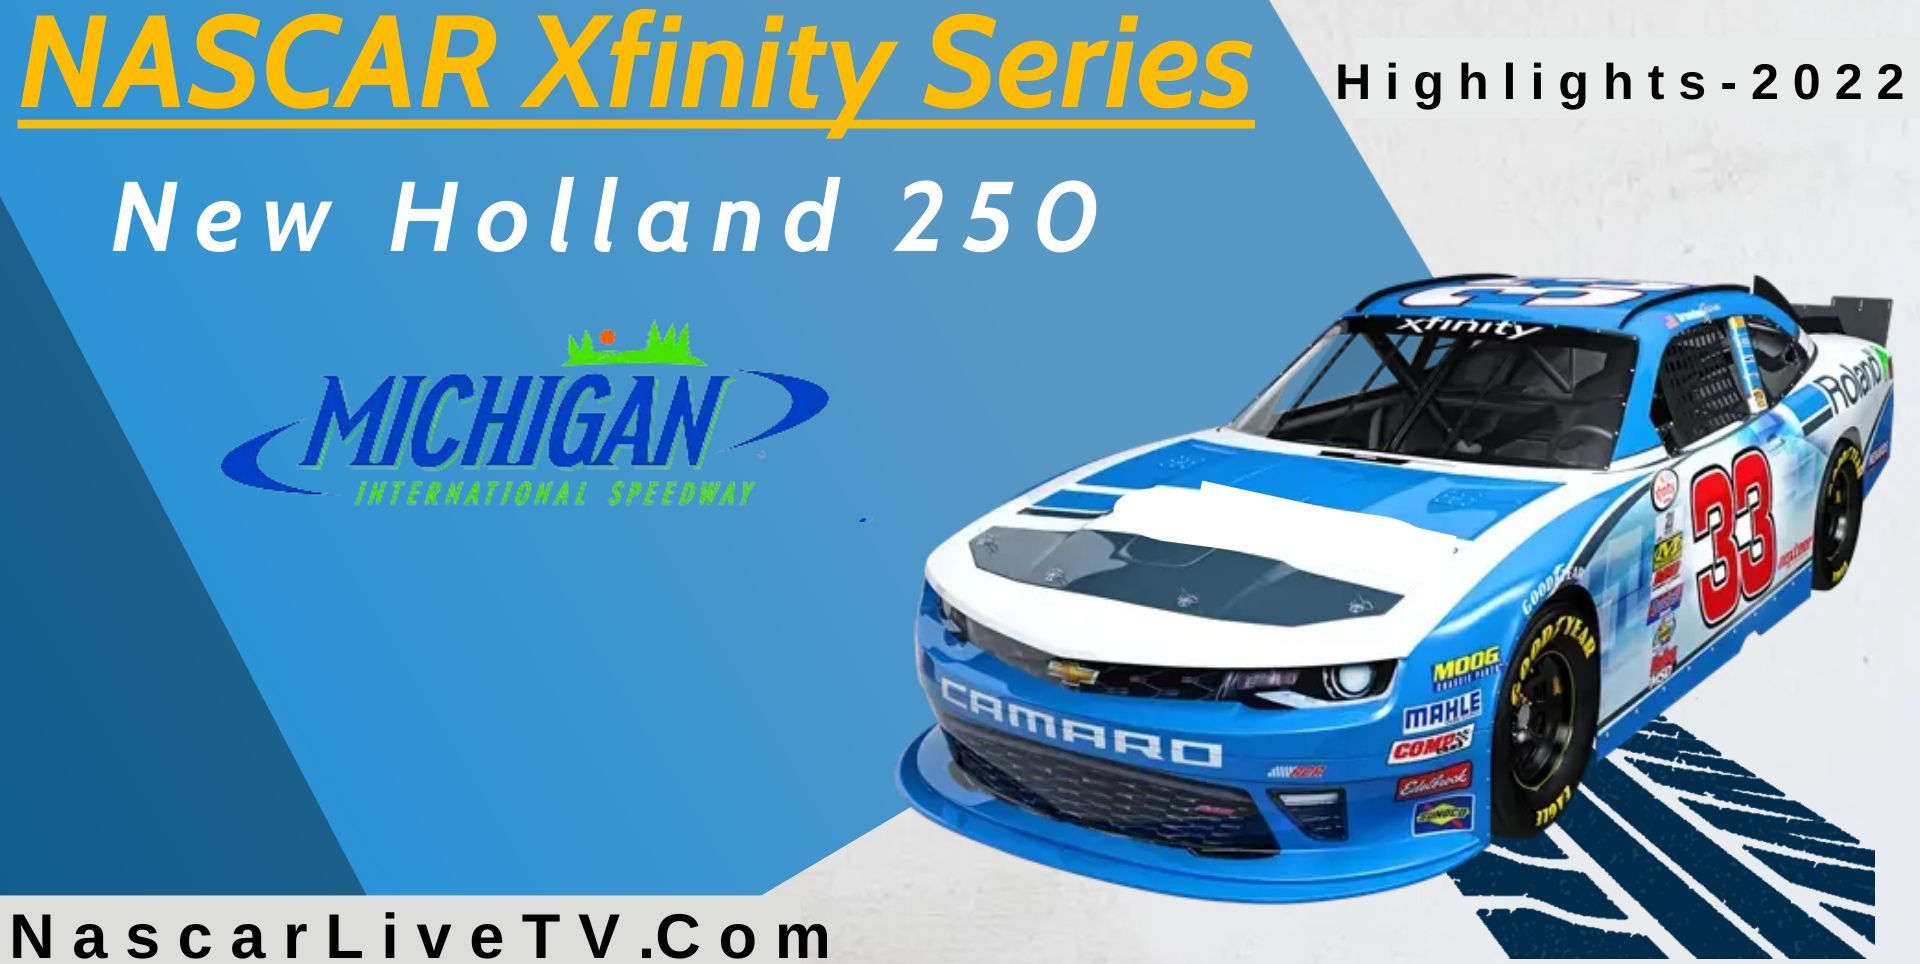 New Holland 250 Highlights NASCAR Xfinity Series 2022